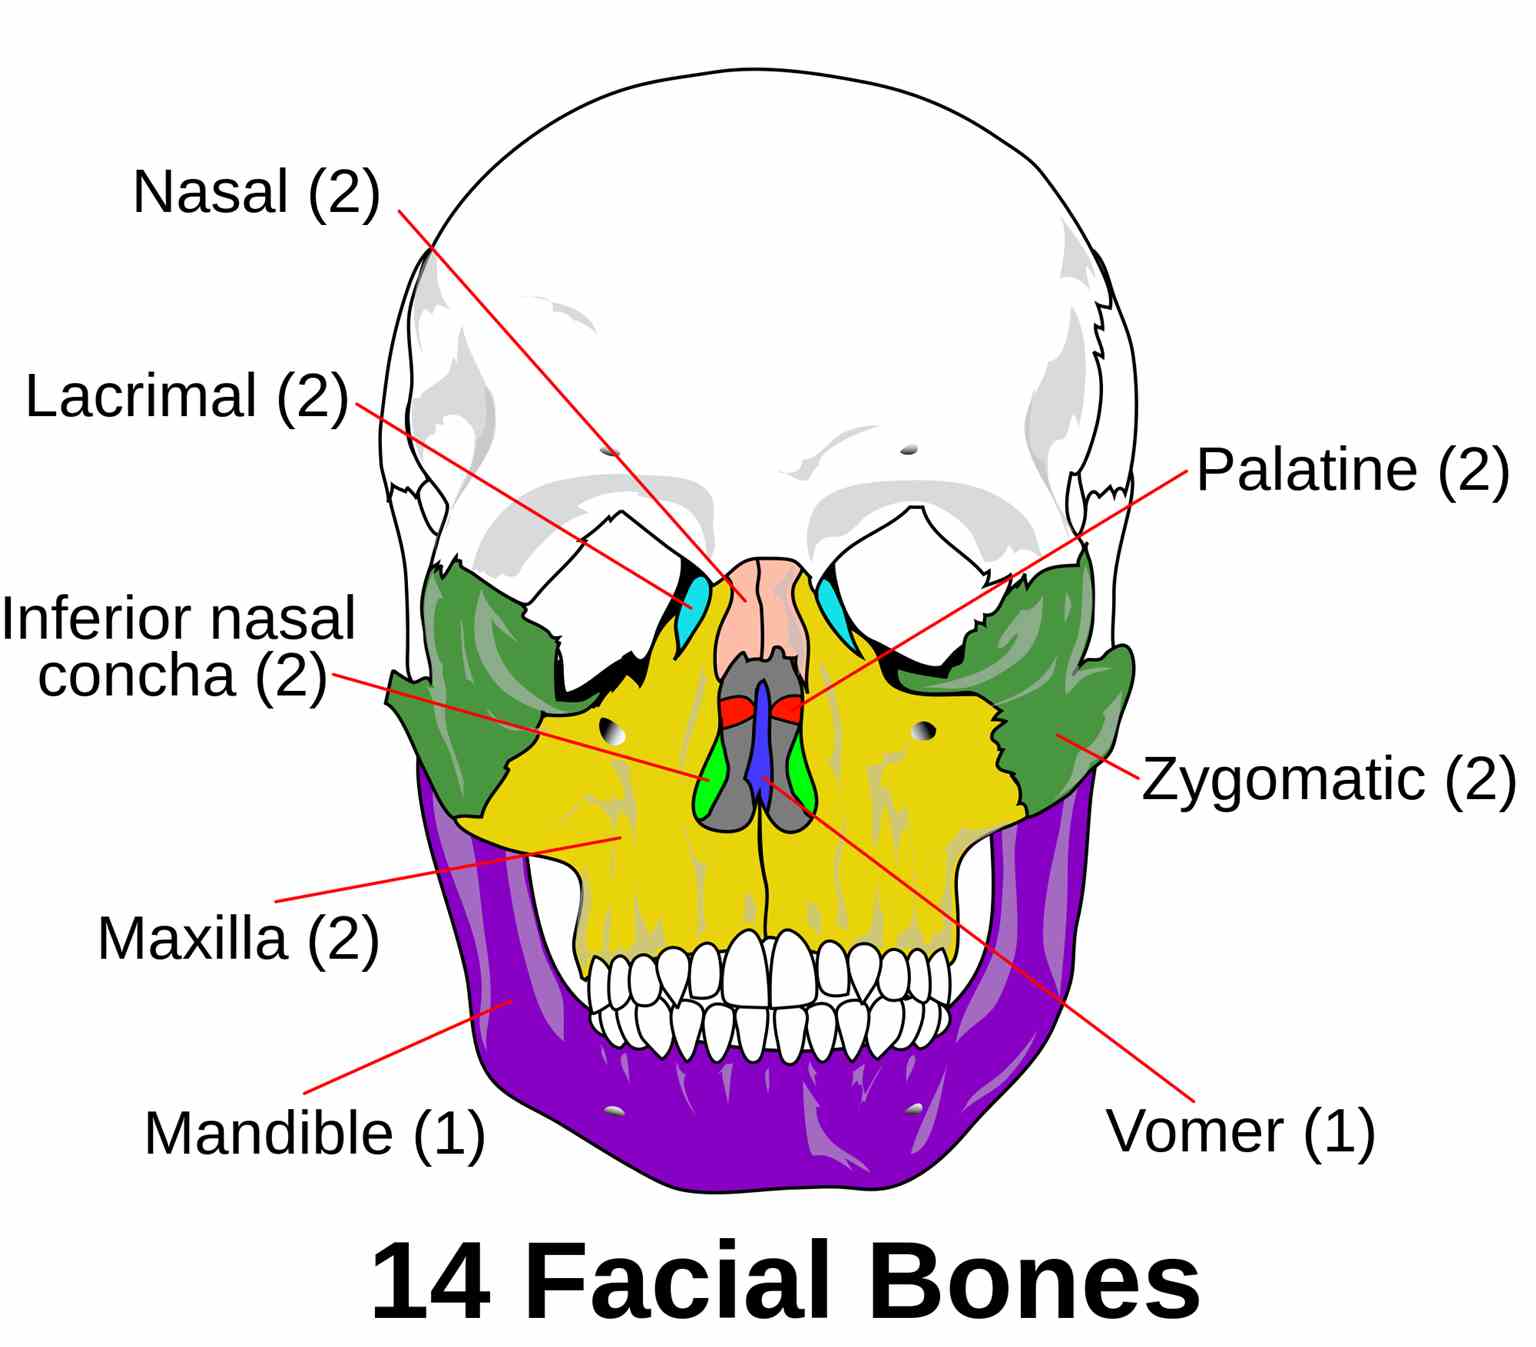 Facial skeleton, Mandible, Vomer, Maxilla, Zygomatic, Inferior nasal concha, palatine, Lacrimal, Nasal